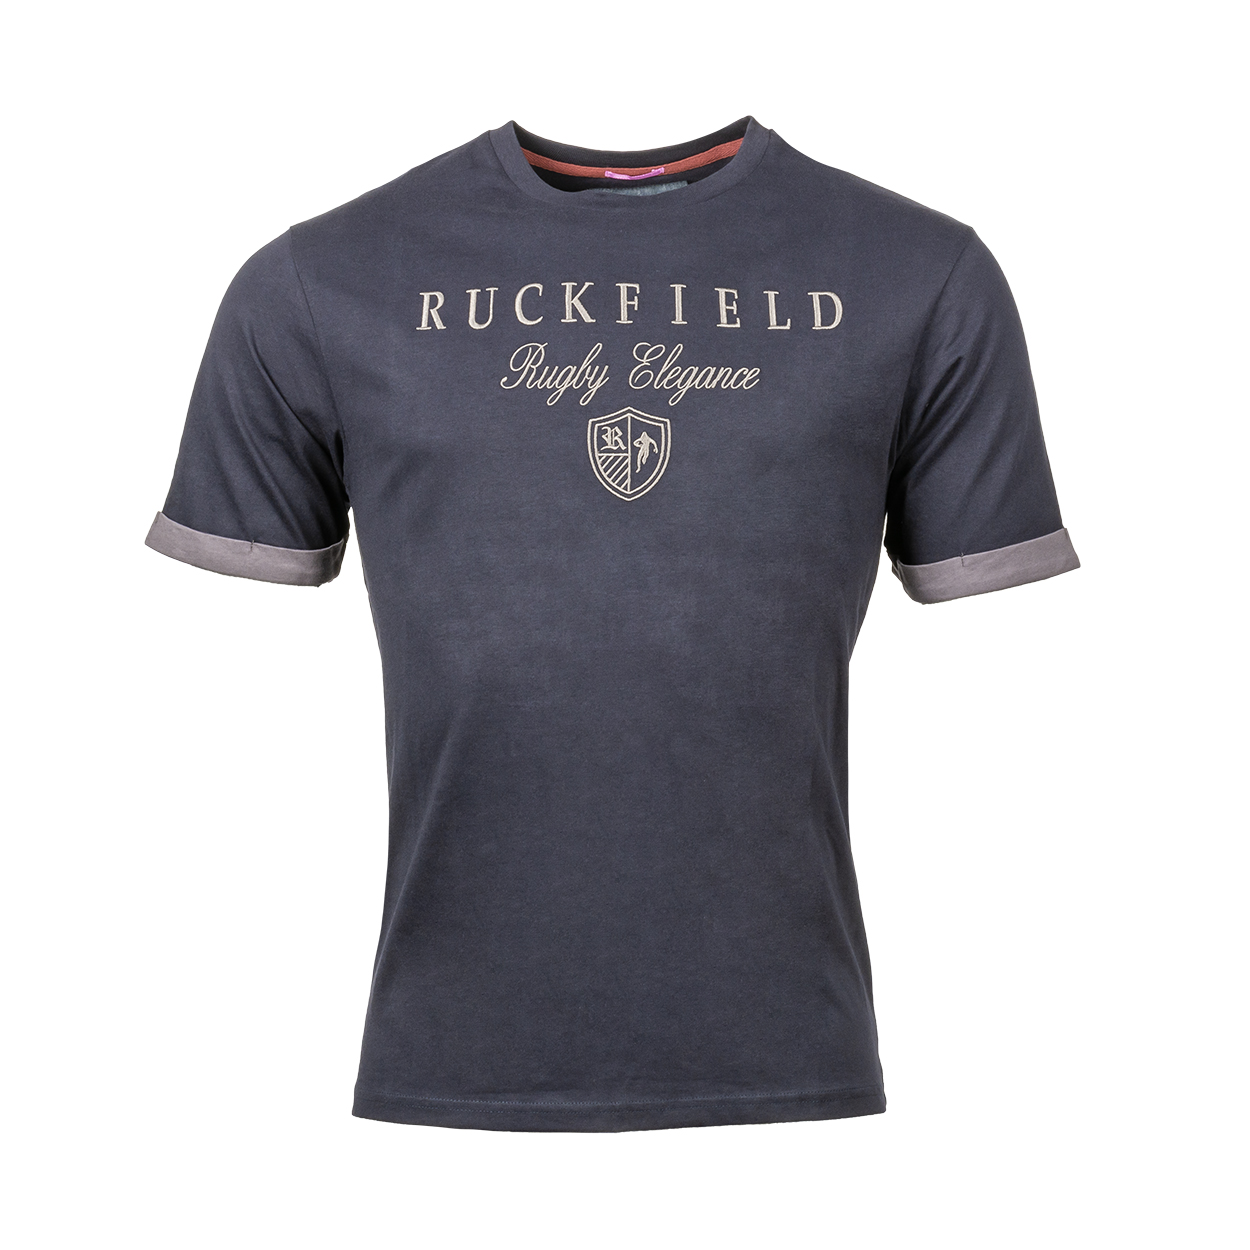 Tee-shirt col rond Ruckfield en coton noir brodé en gris